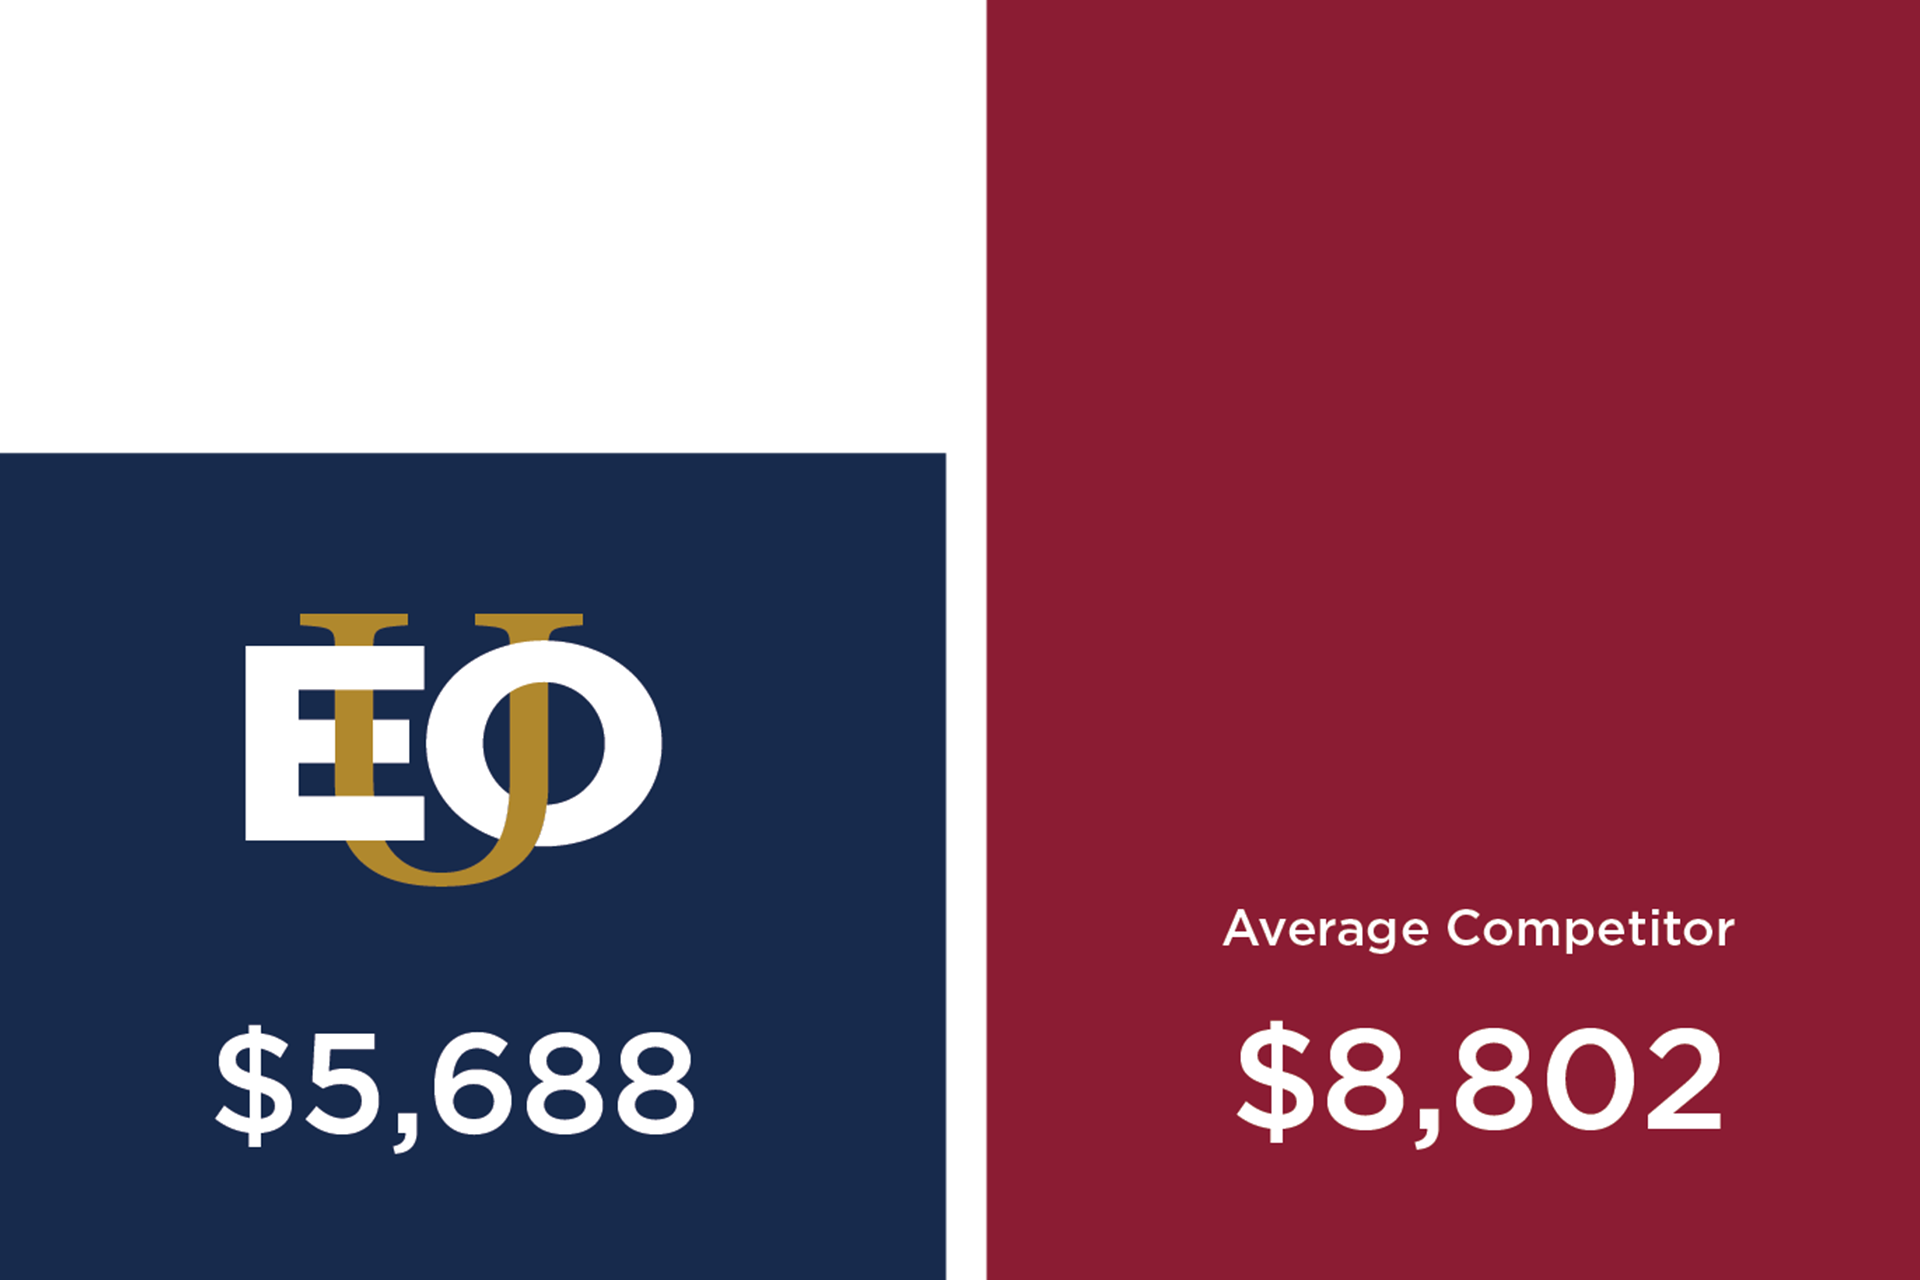 E O U $5,688 versus Average Competitor $8,802